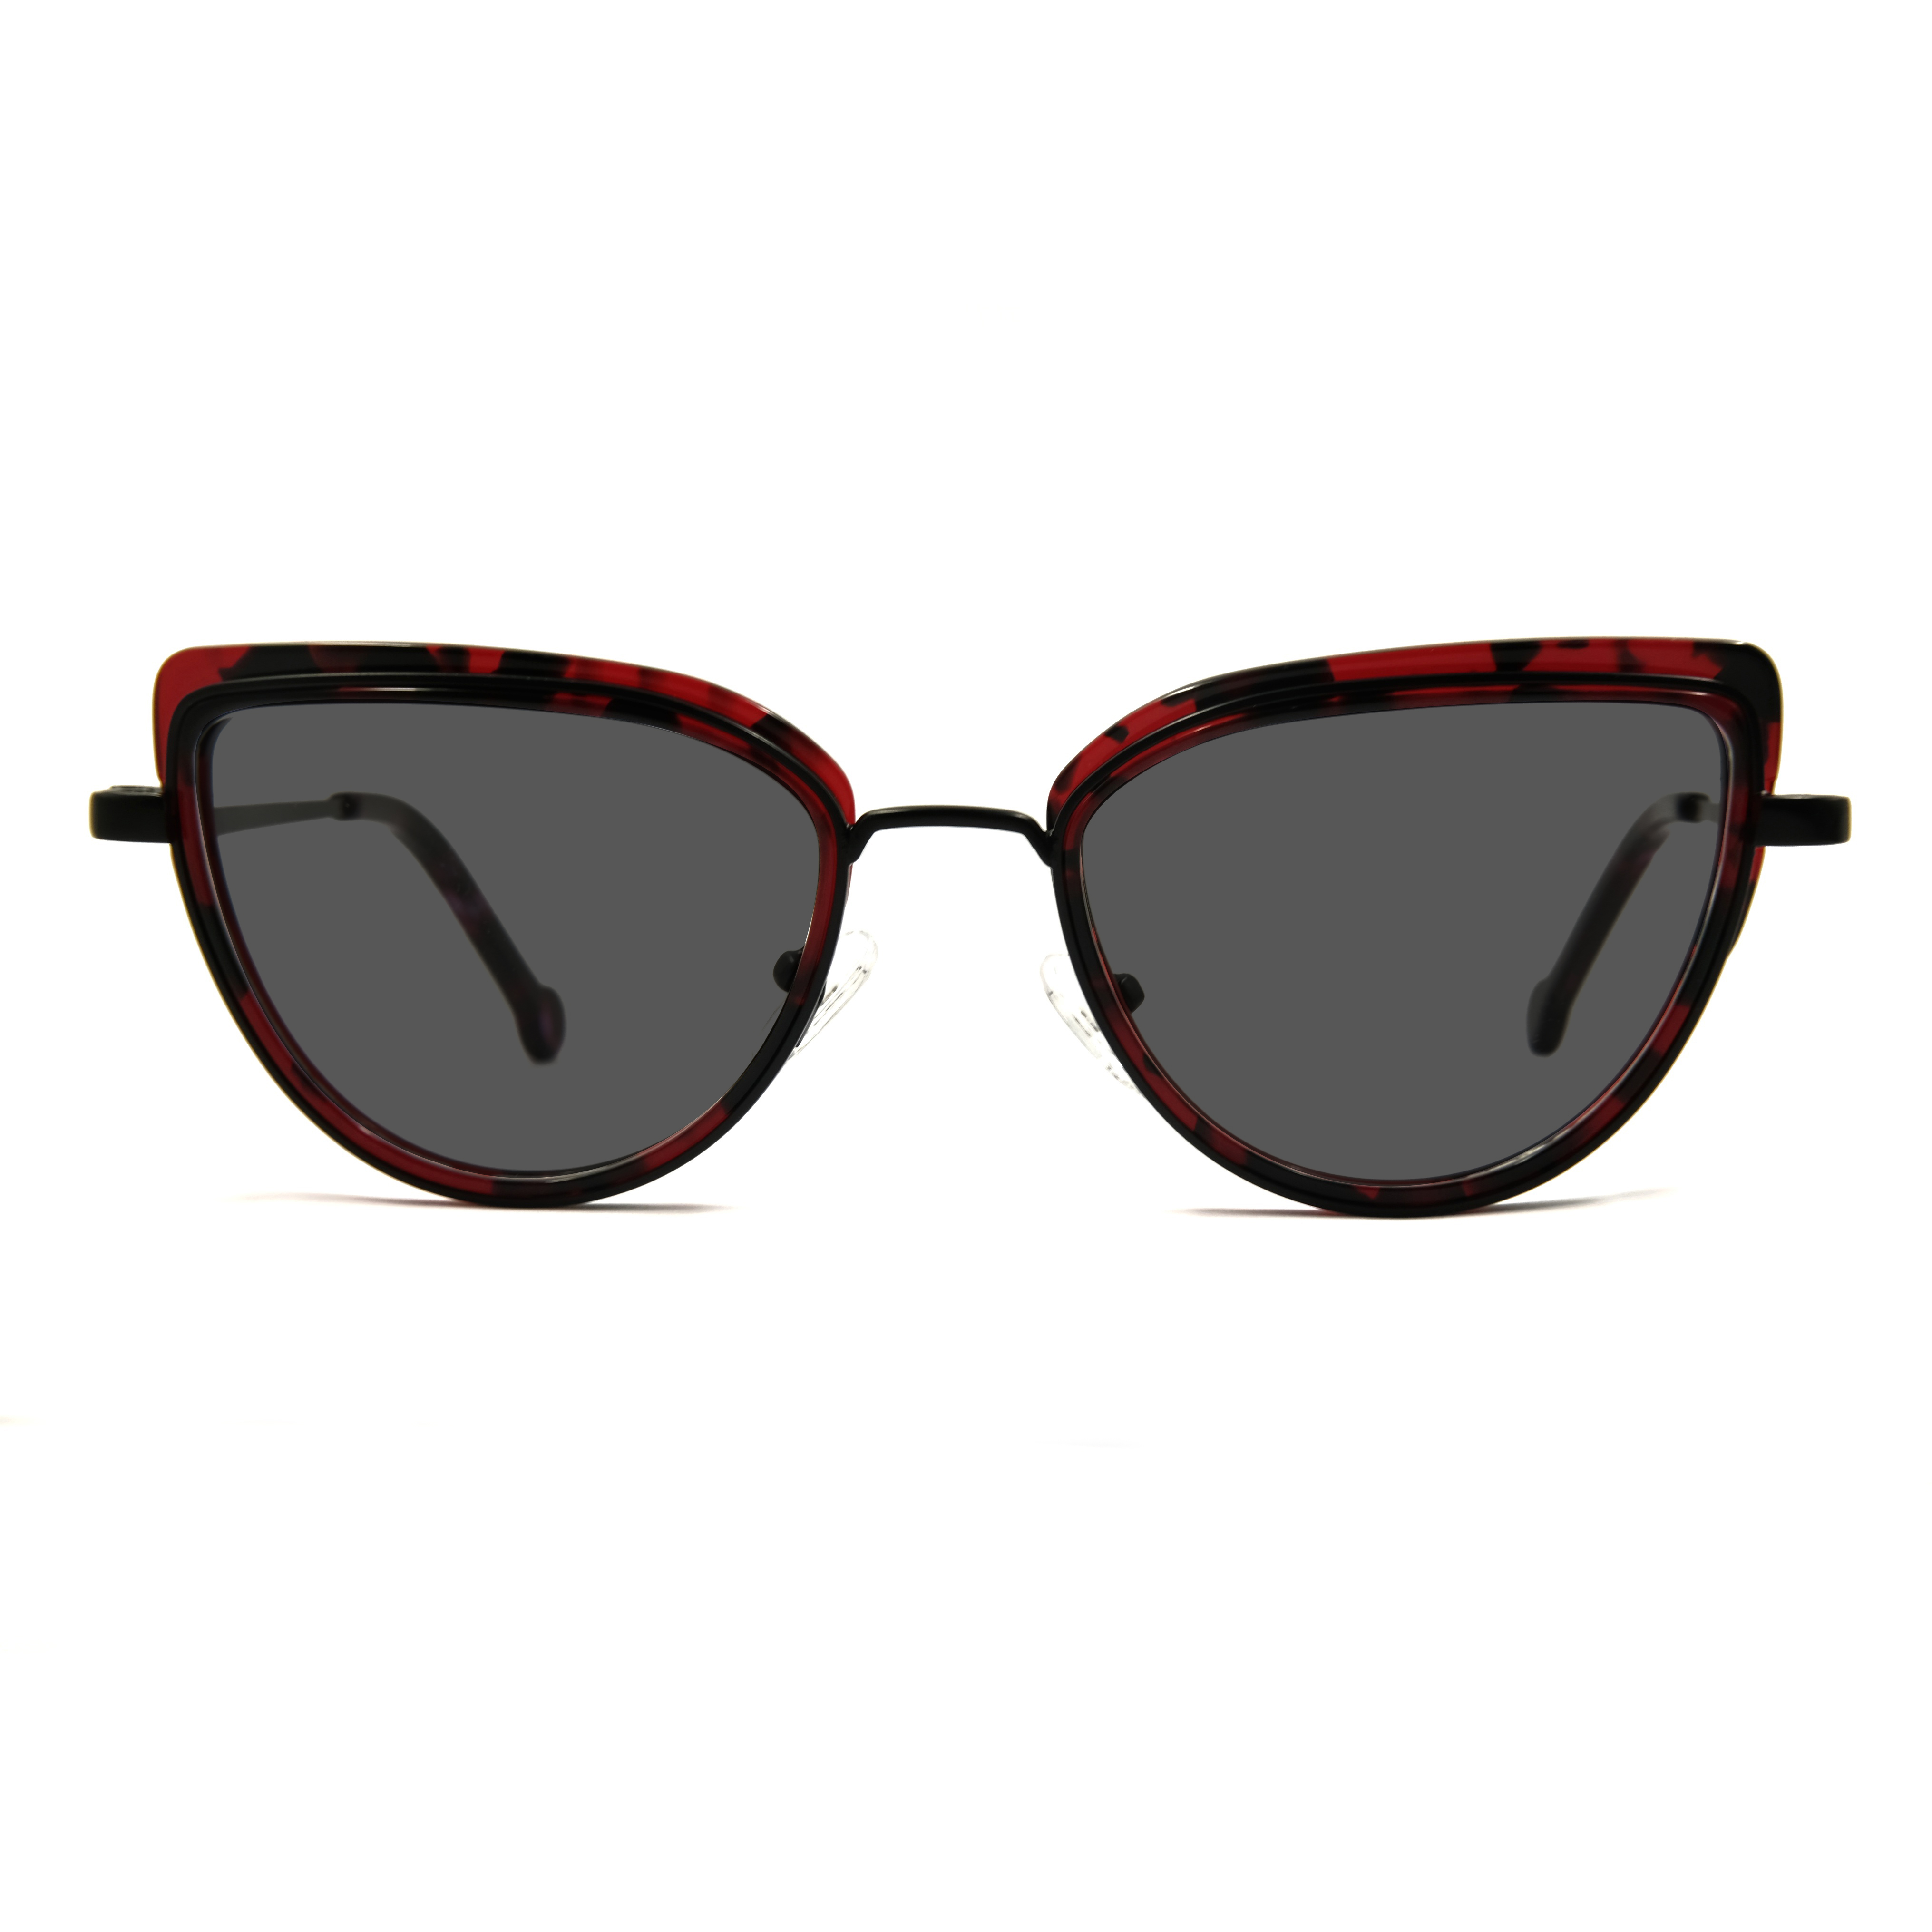 Classic Cat Eye Sun Glasses Black Red Acetate Cupronickel Hybrid Sunglasses Fashion Luxurious